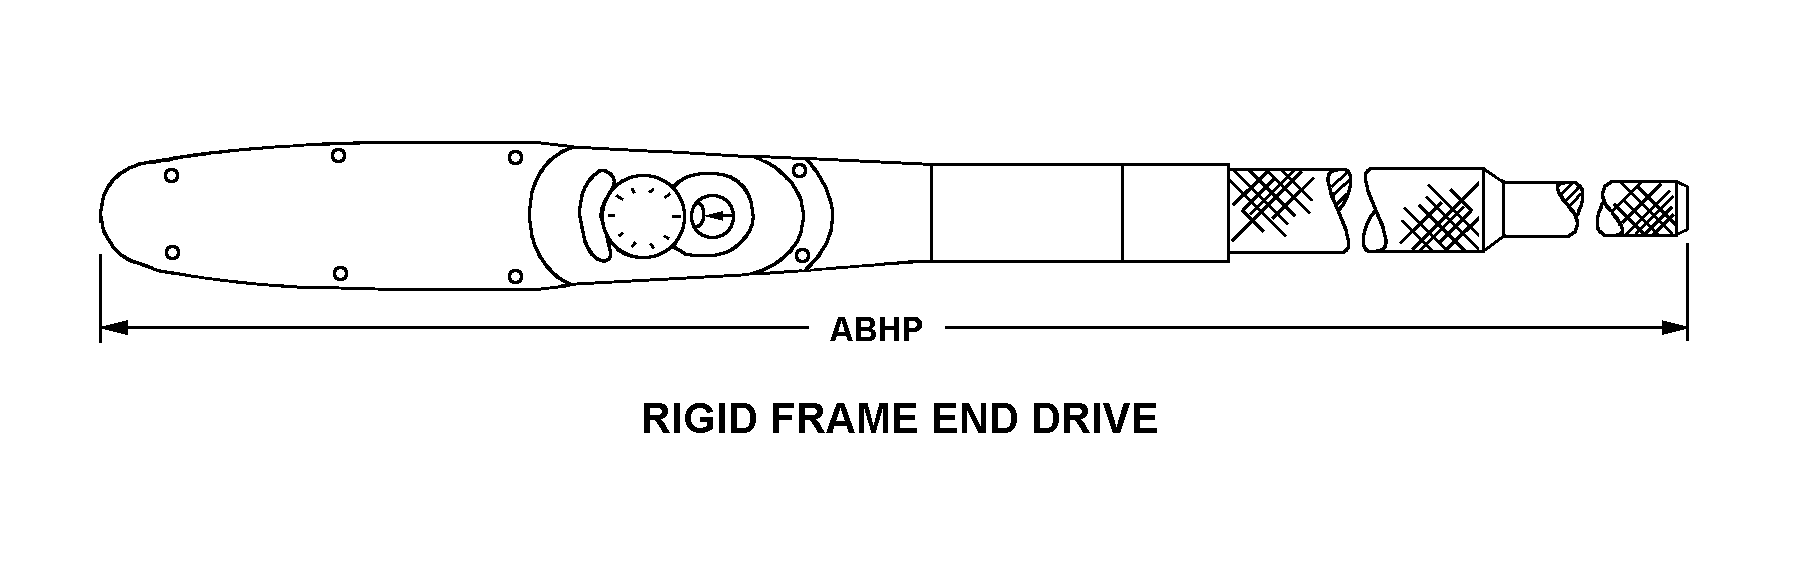 RIGID FRAME END DRIVE style nsn 5120-01-236-5706